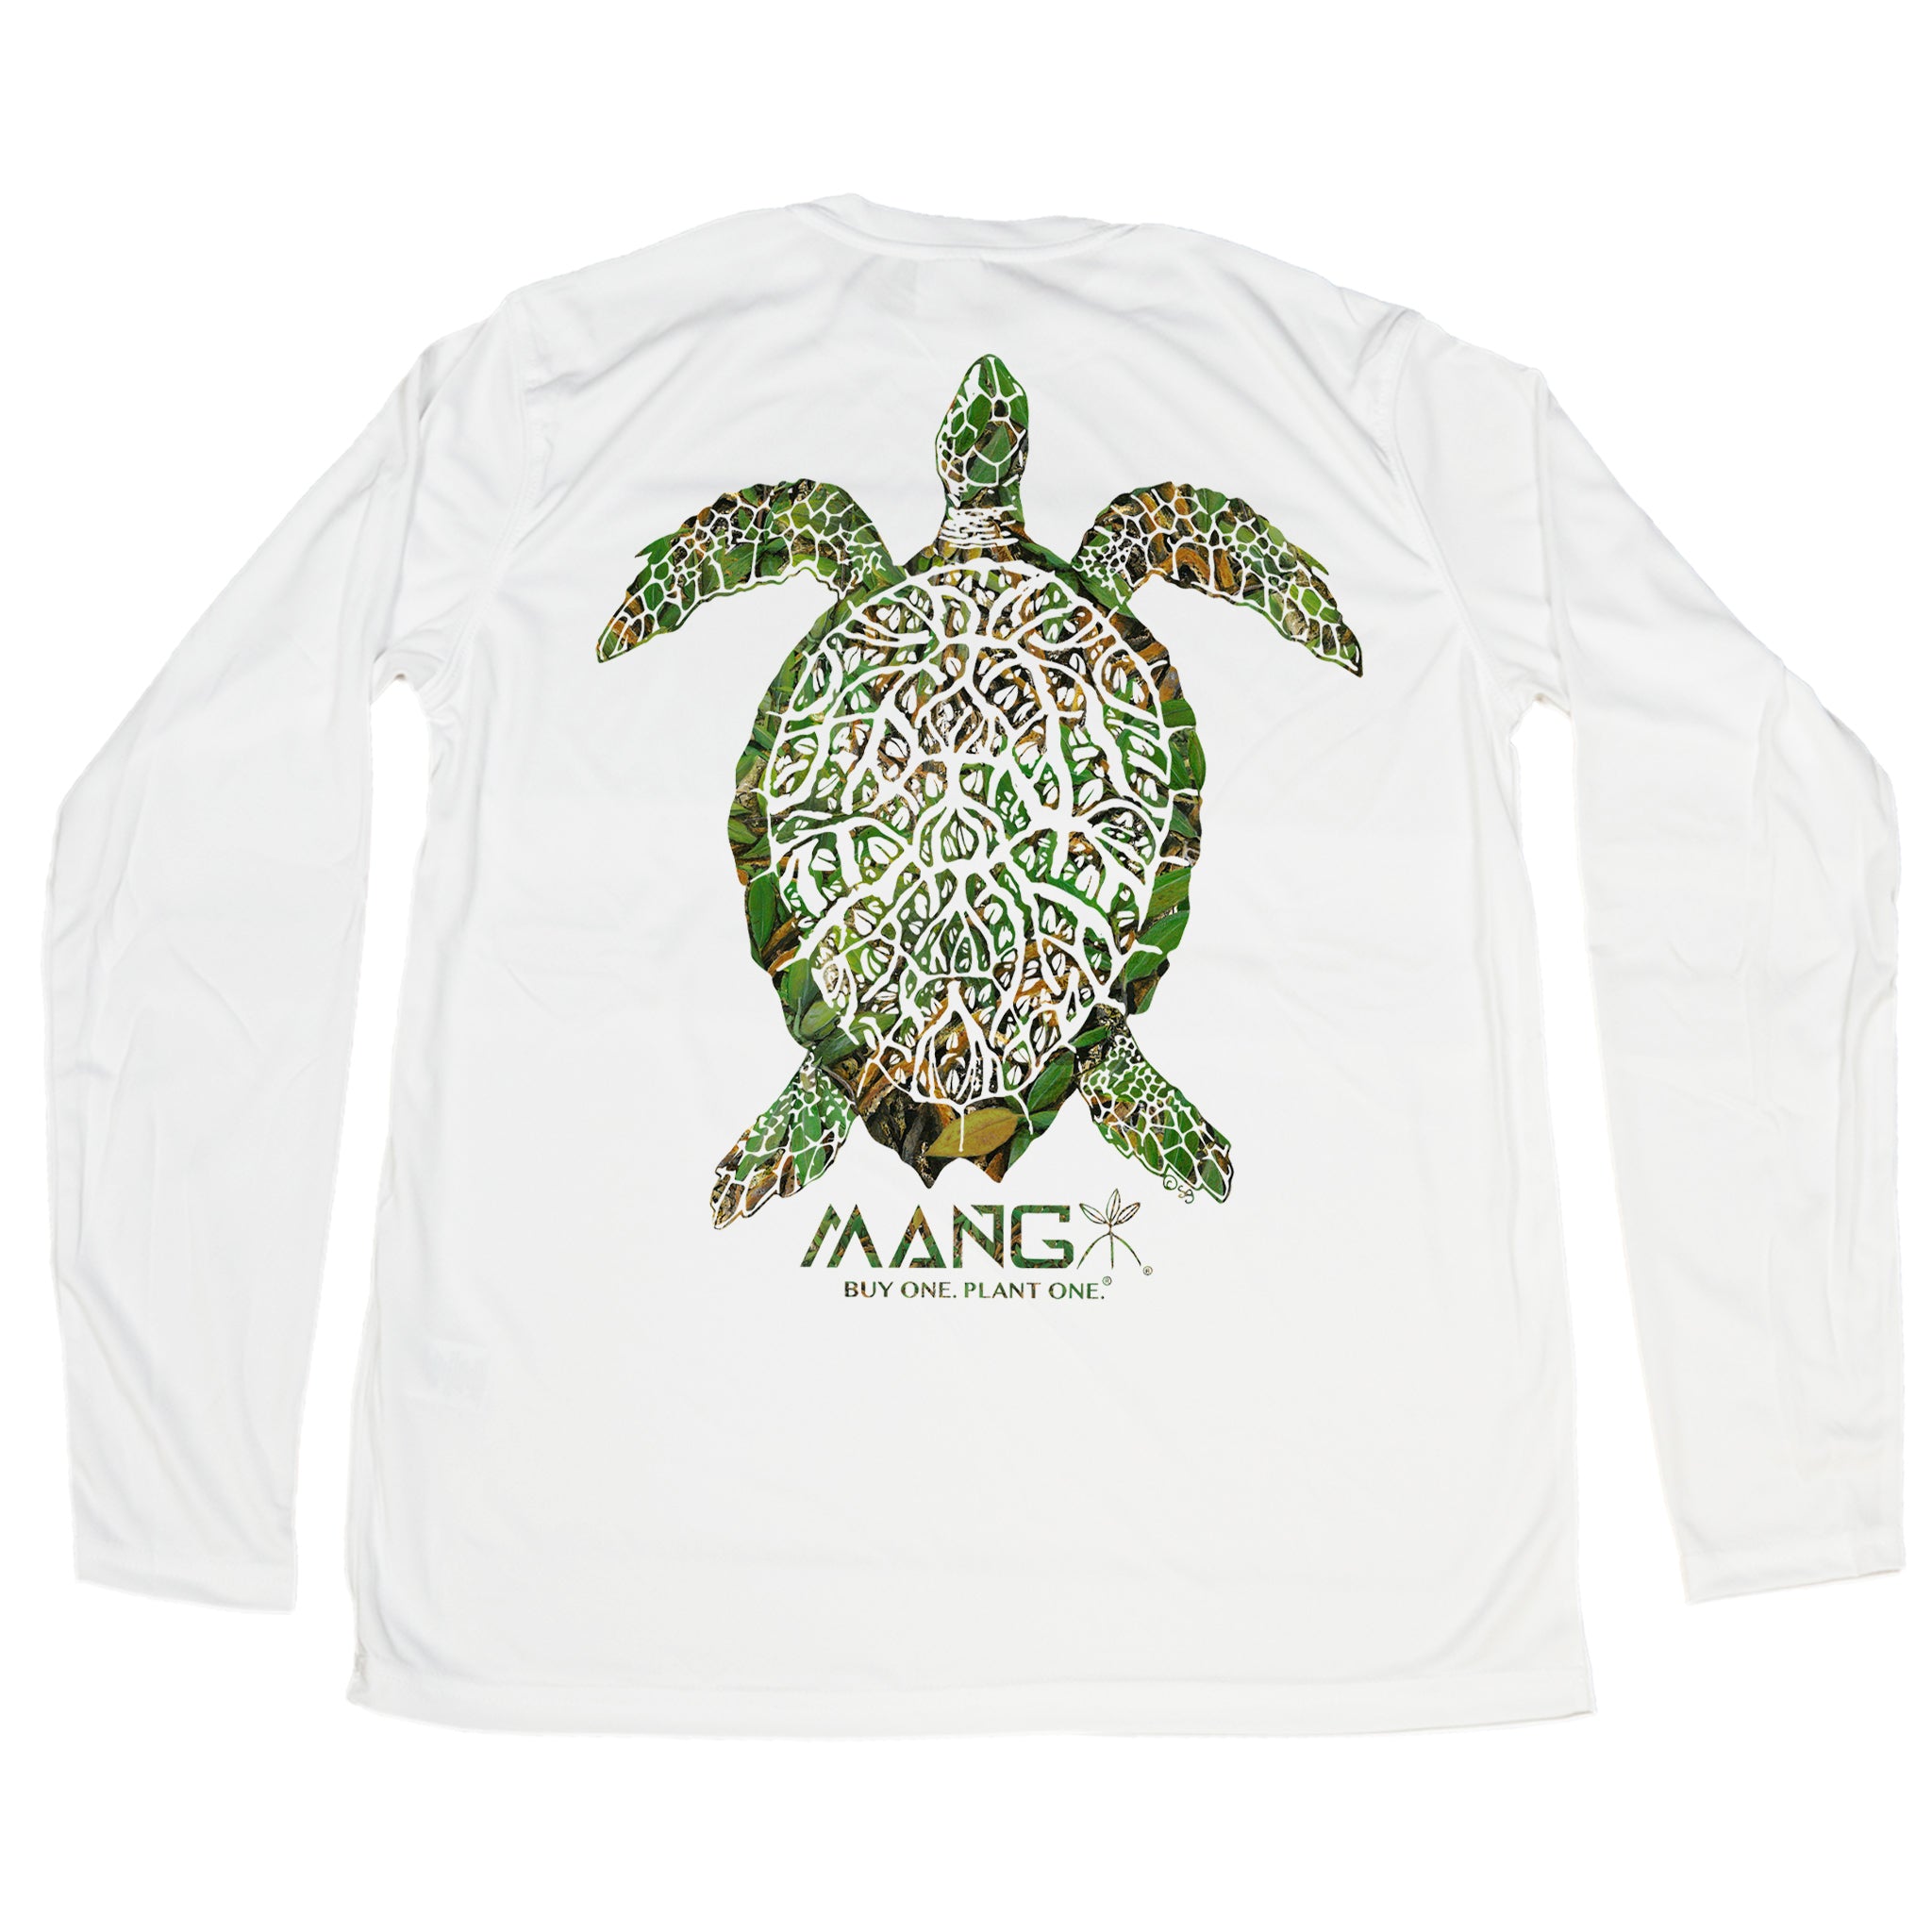 MANG Grassy Turtle - LS - XS-White